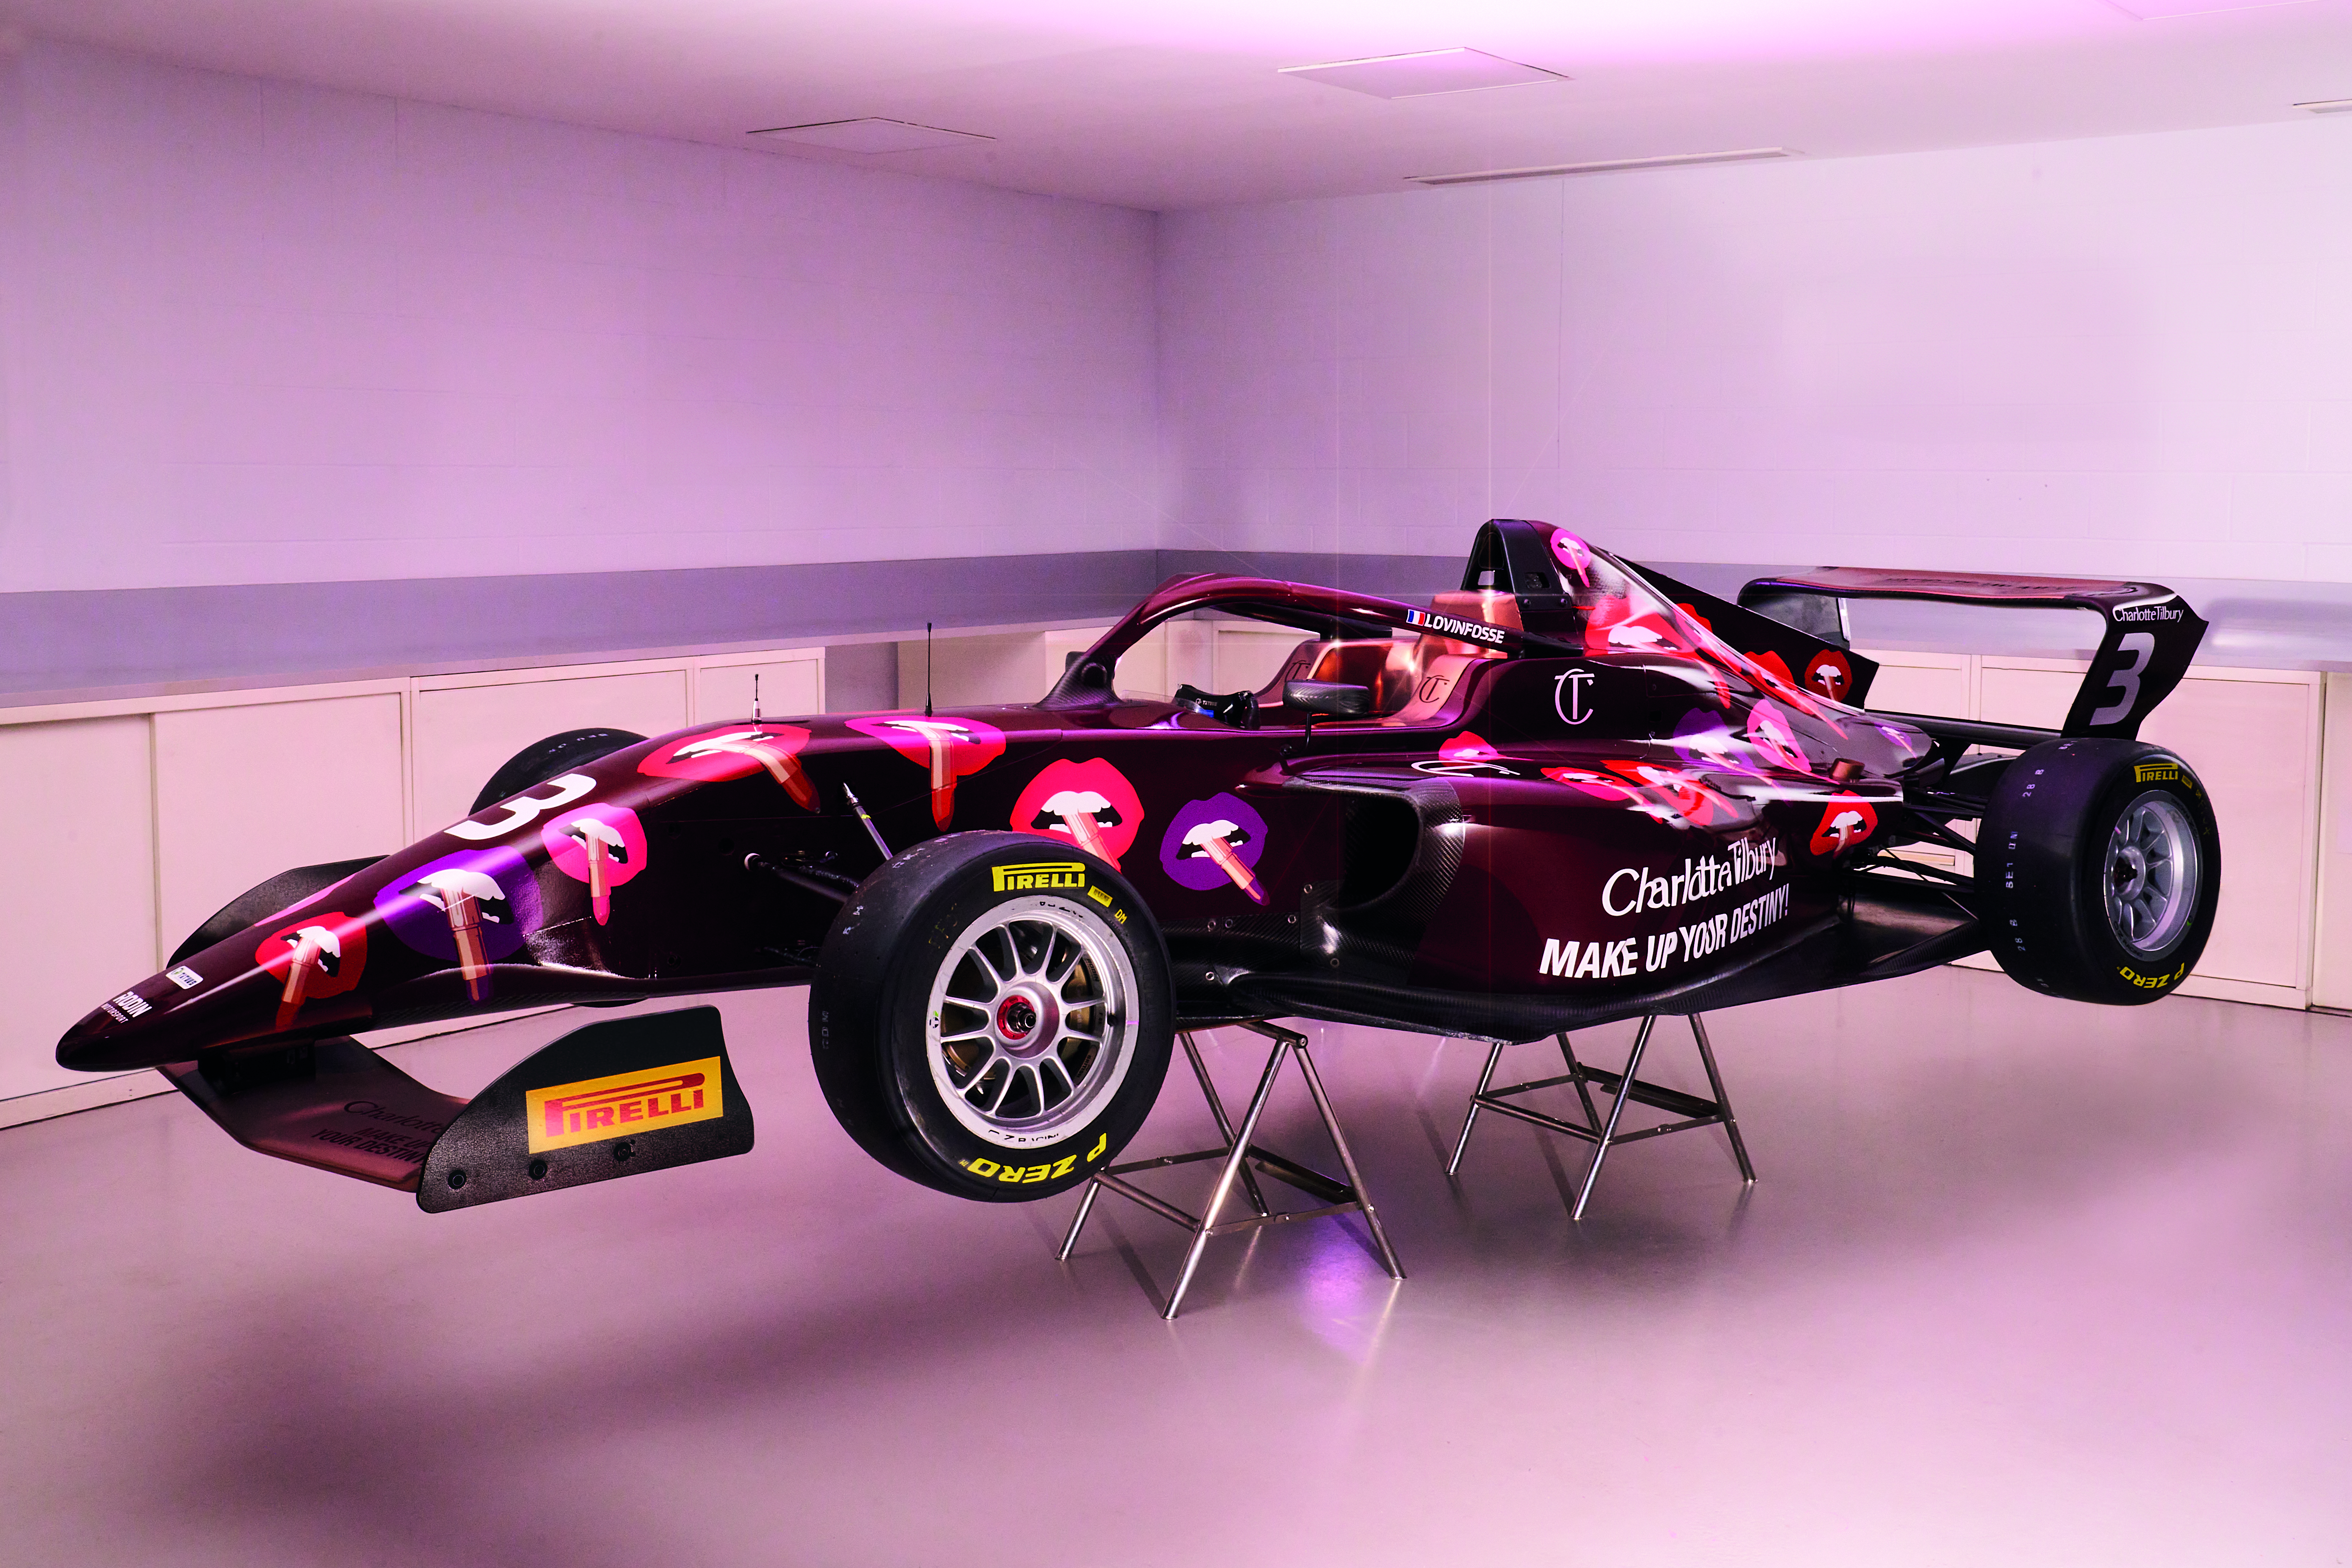 Charlotte Tilbury Formula 1 Academy Car